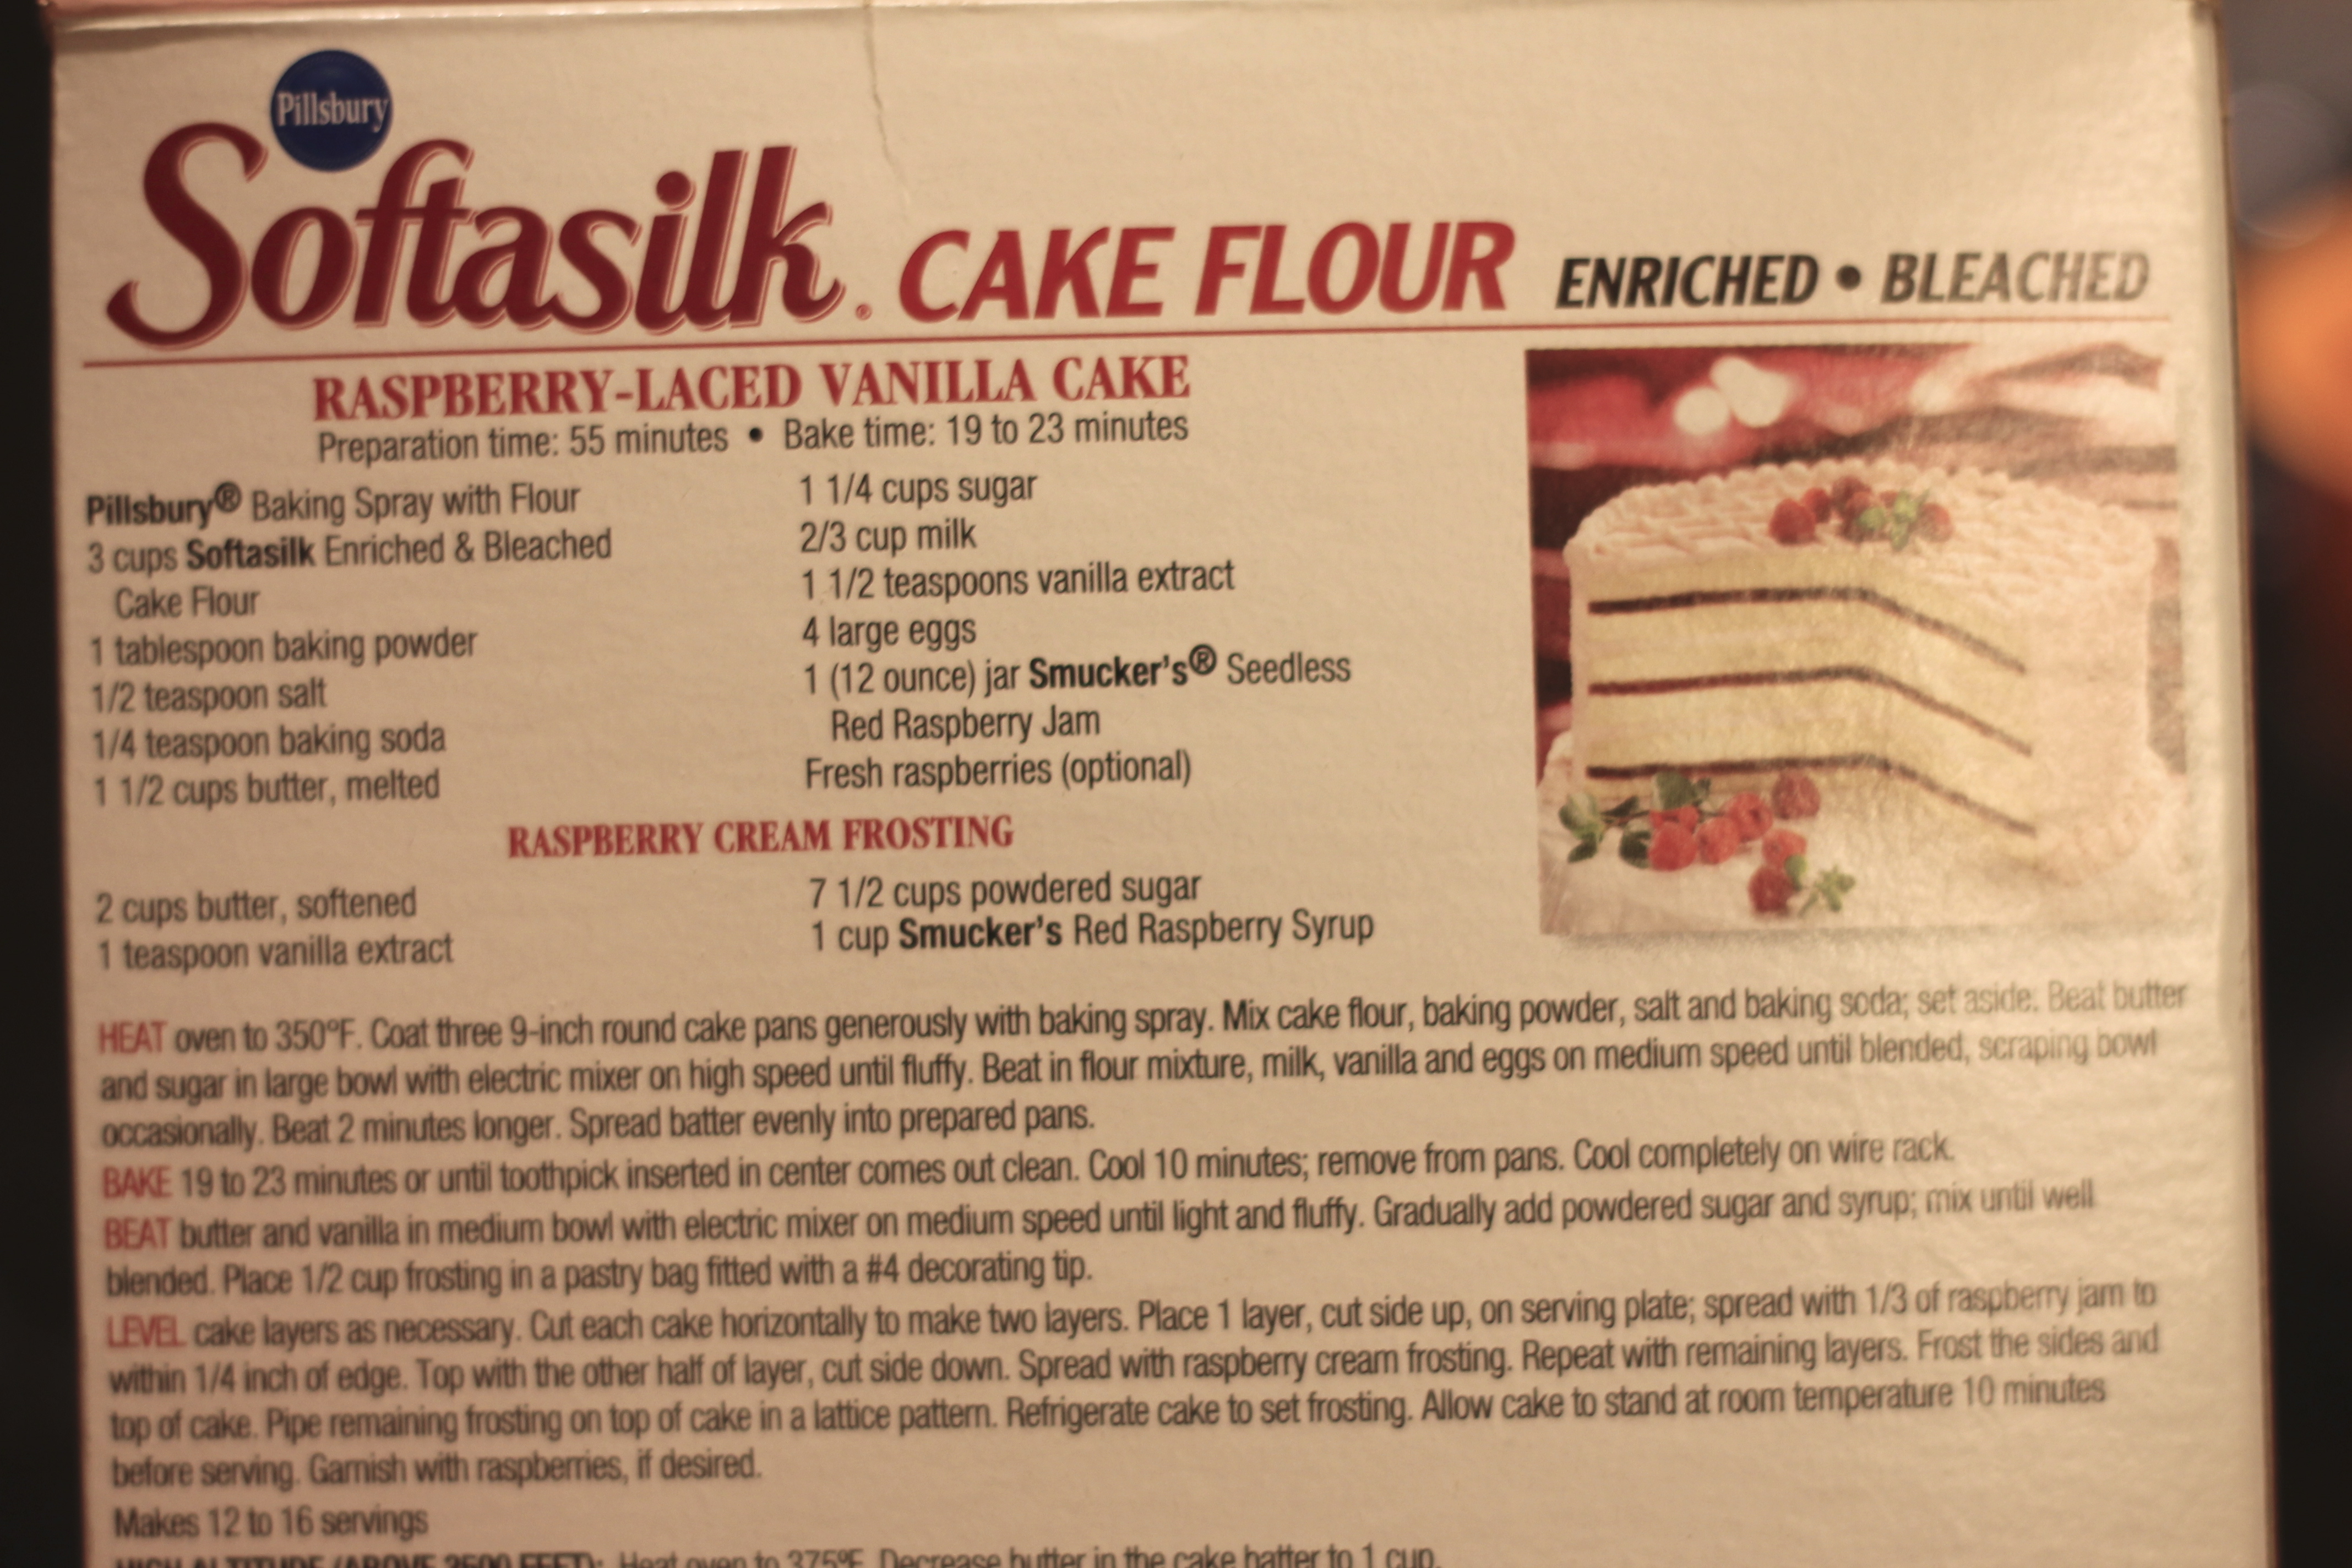 What is a good Softasilk cake flour recipe?